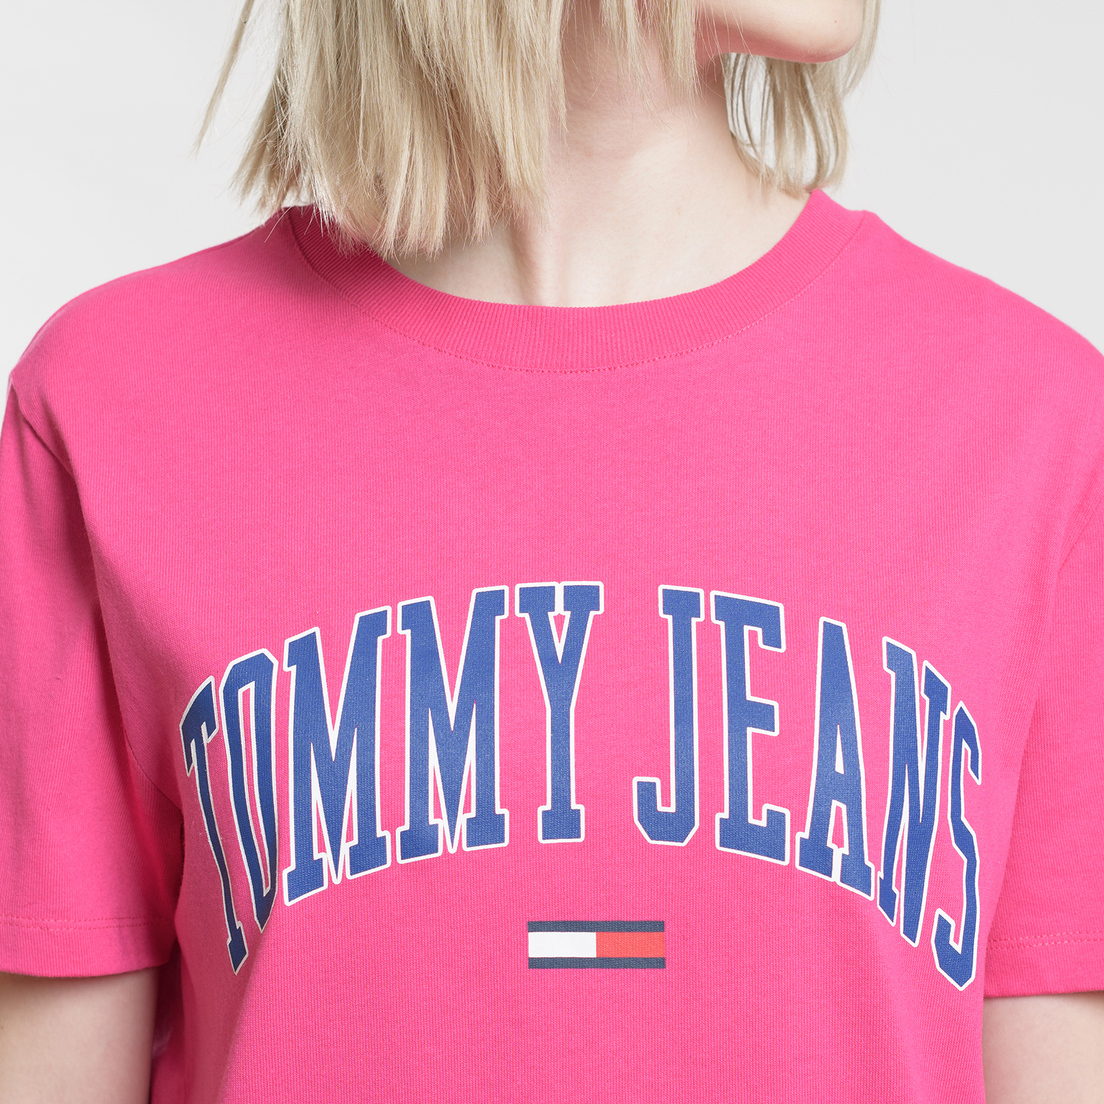 Tommy Jeans Женская футболка Collegiate Logo